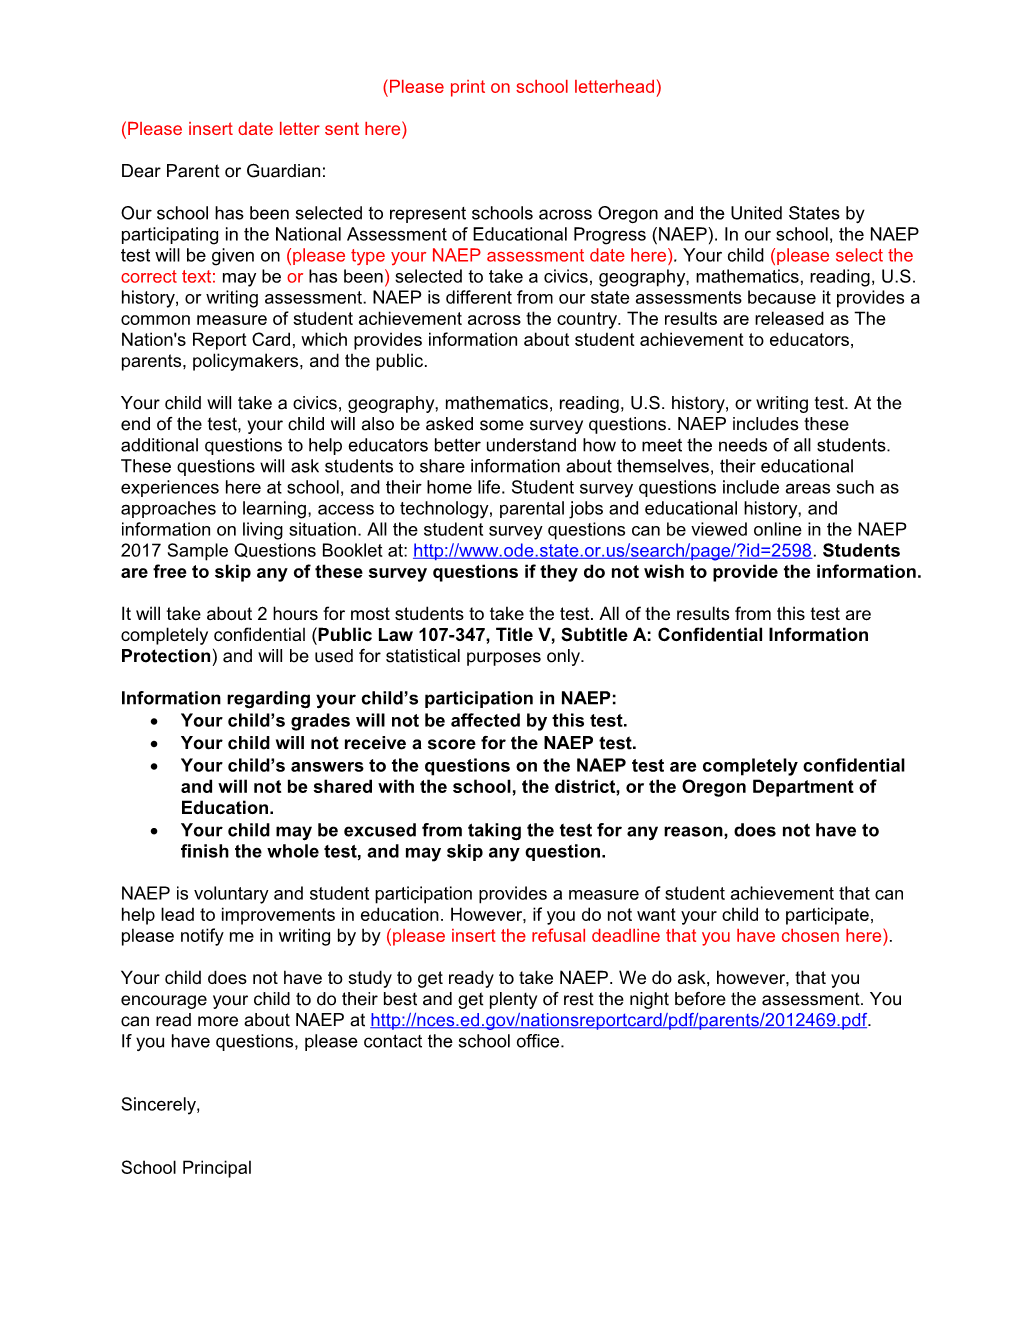 Sample Parent-Guardian Notification Letter NAEP 2015 - TBA Pilot (*, 7/25/2014)